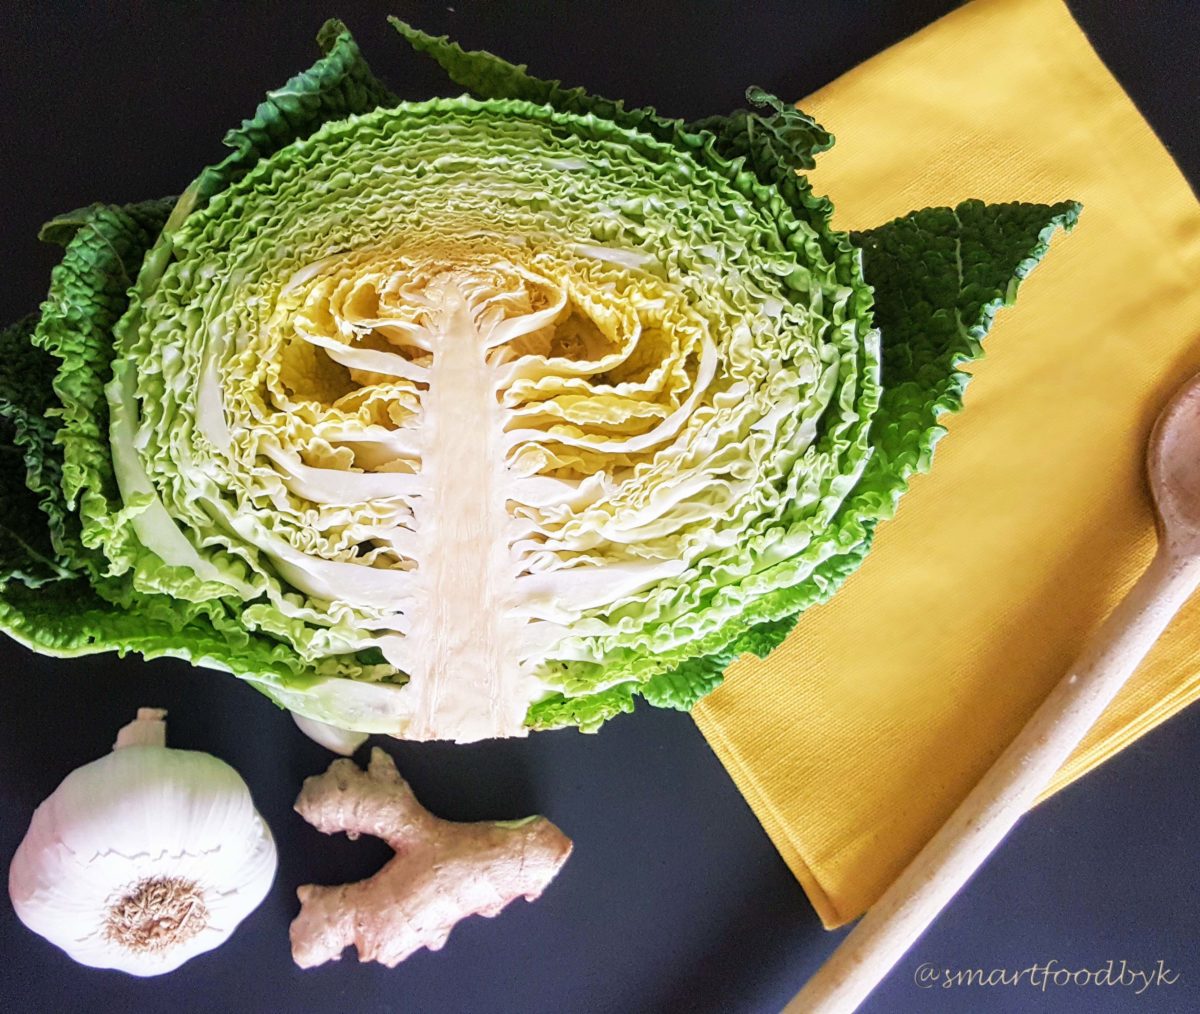 Cabbage garlic ginger, power veggies bursting with vitamins and minerals.